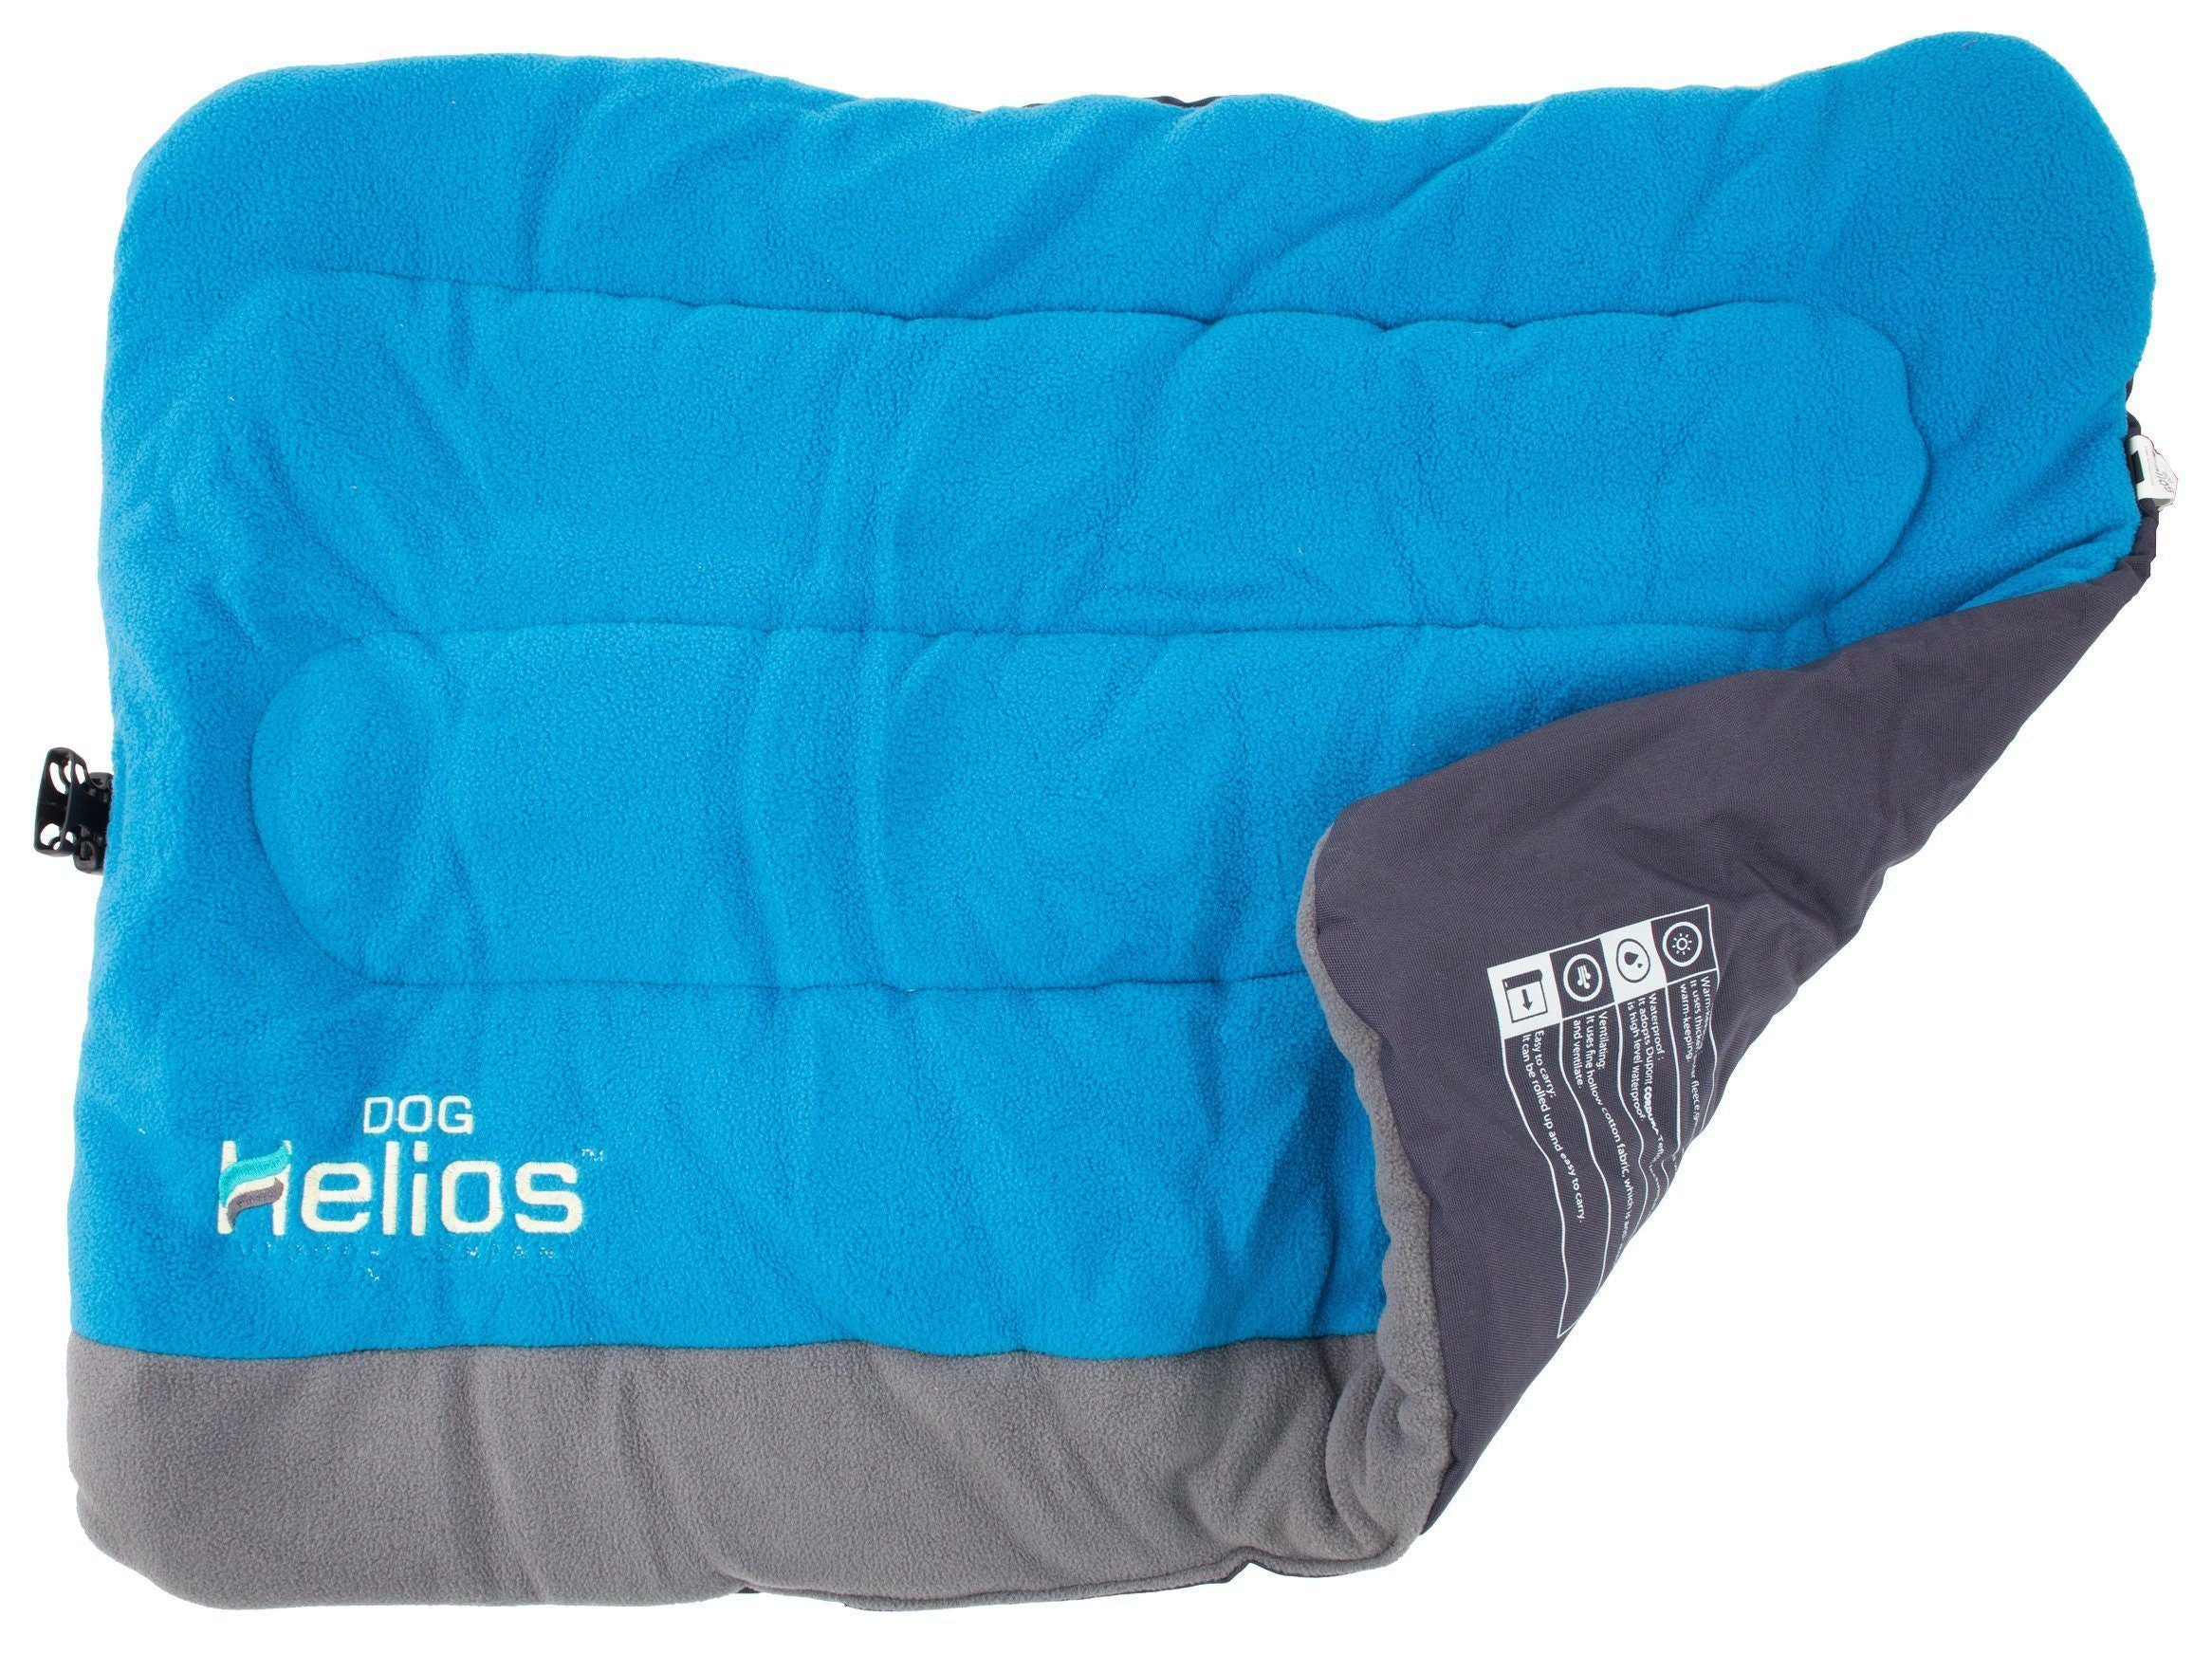 Dog Helios ® 'Combat-Terrain' Cordura-Nyco Reversible Nylon and Fleece Travel Camping Dog Bed Medium Blue, Grey